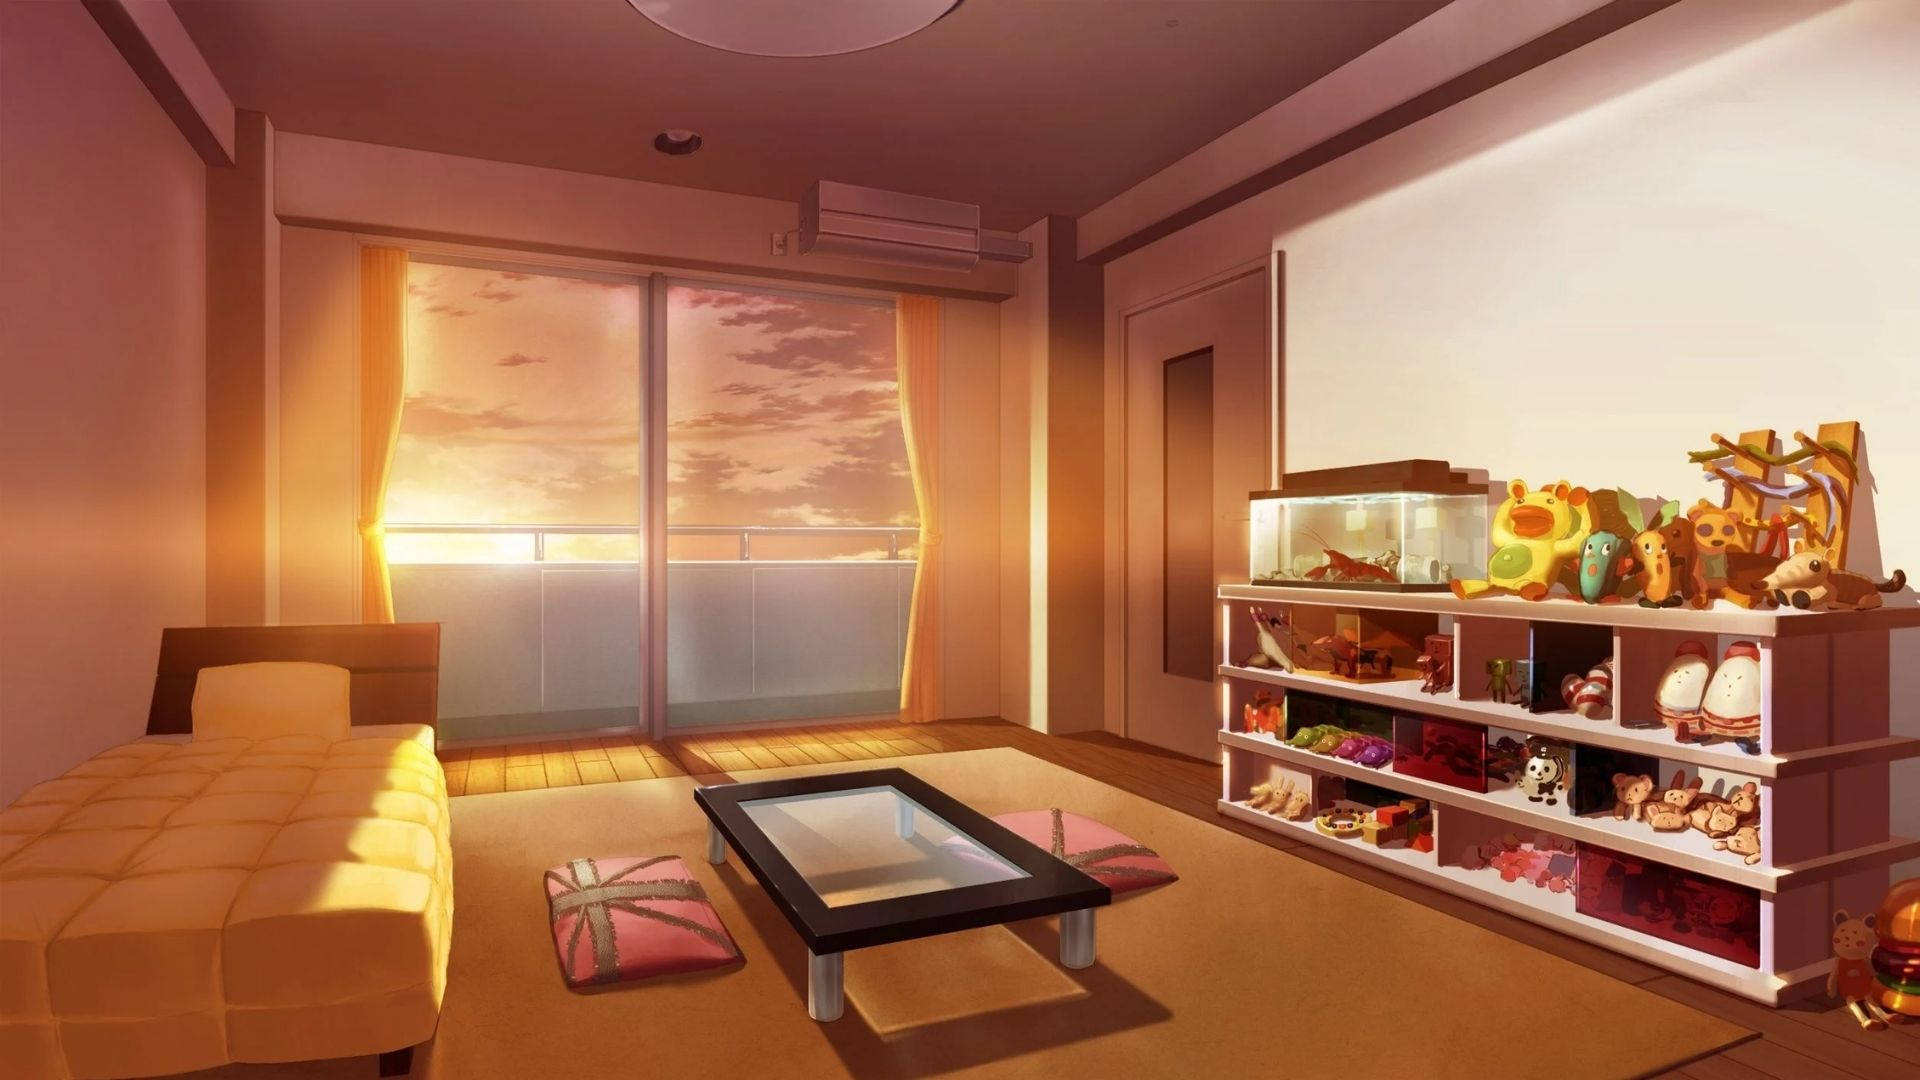 Anime Room At Sunset Wallpaper